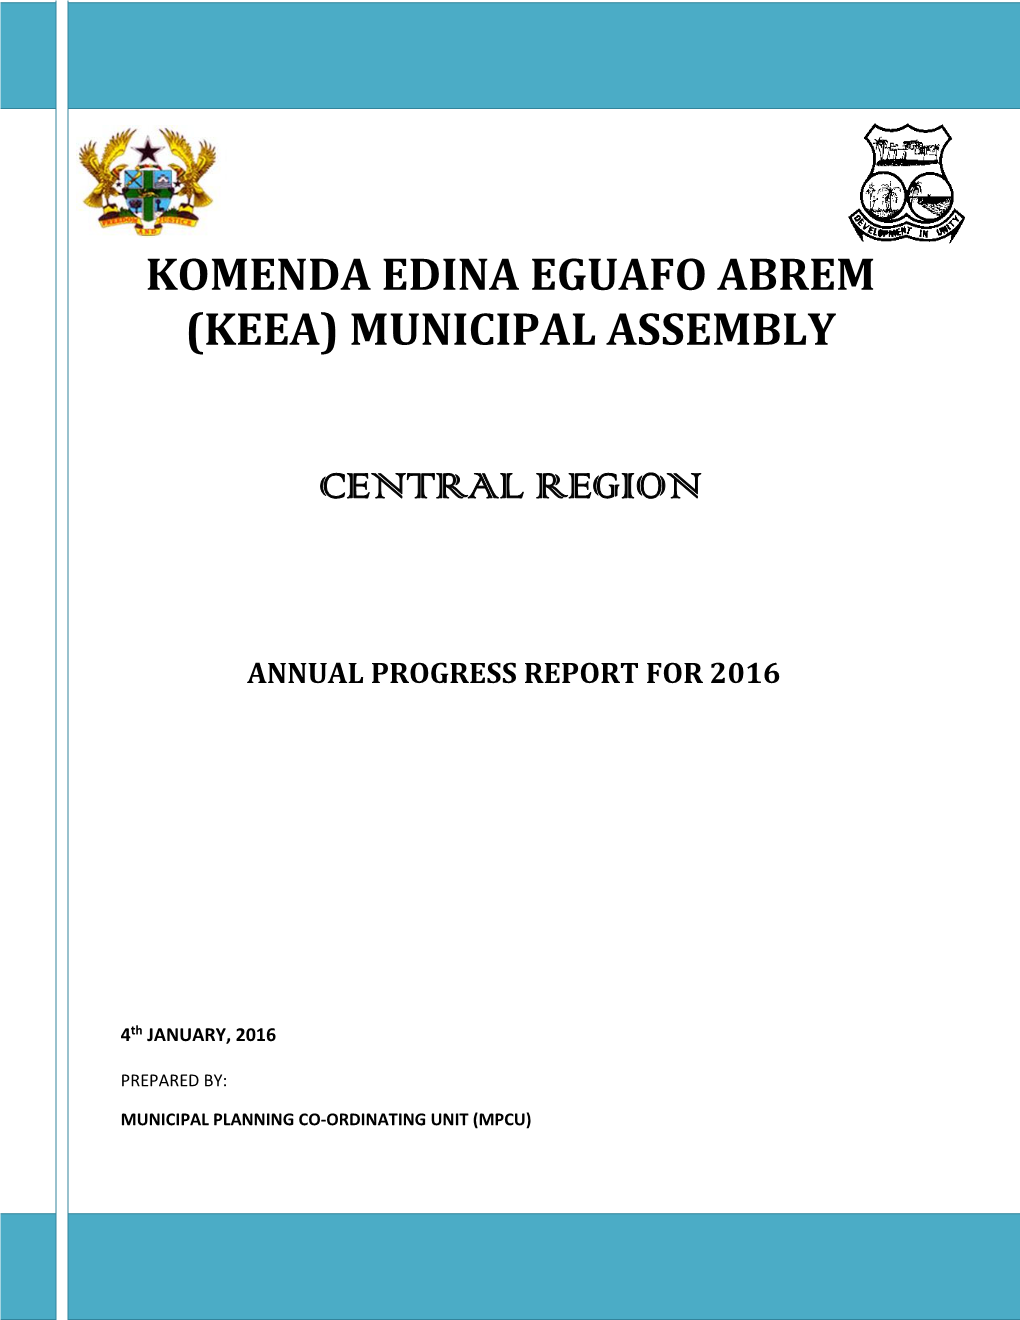 Komenda Edina Eguafo Abrem (Keea) Municipal Assembly